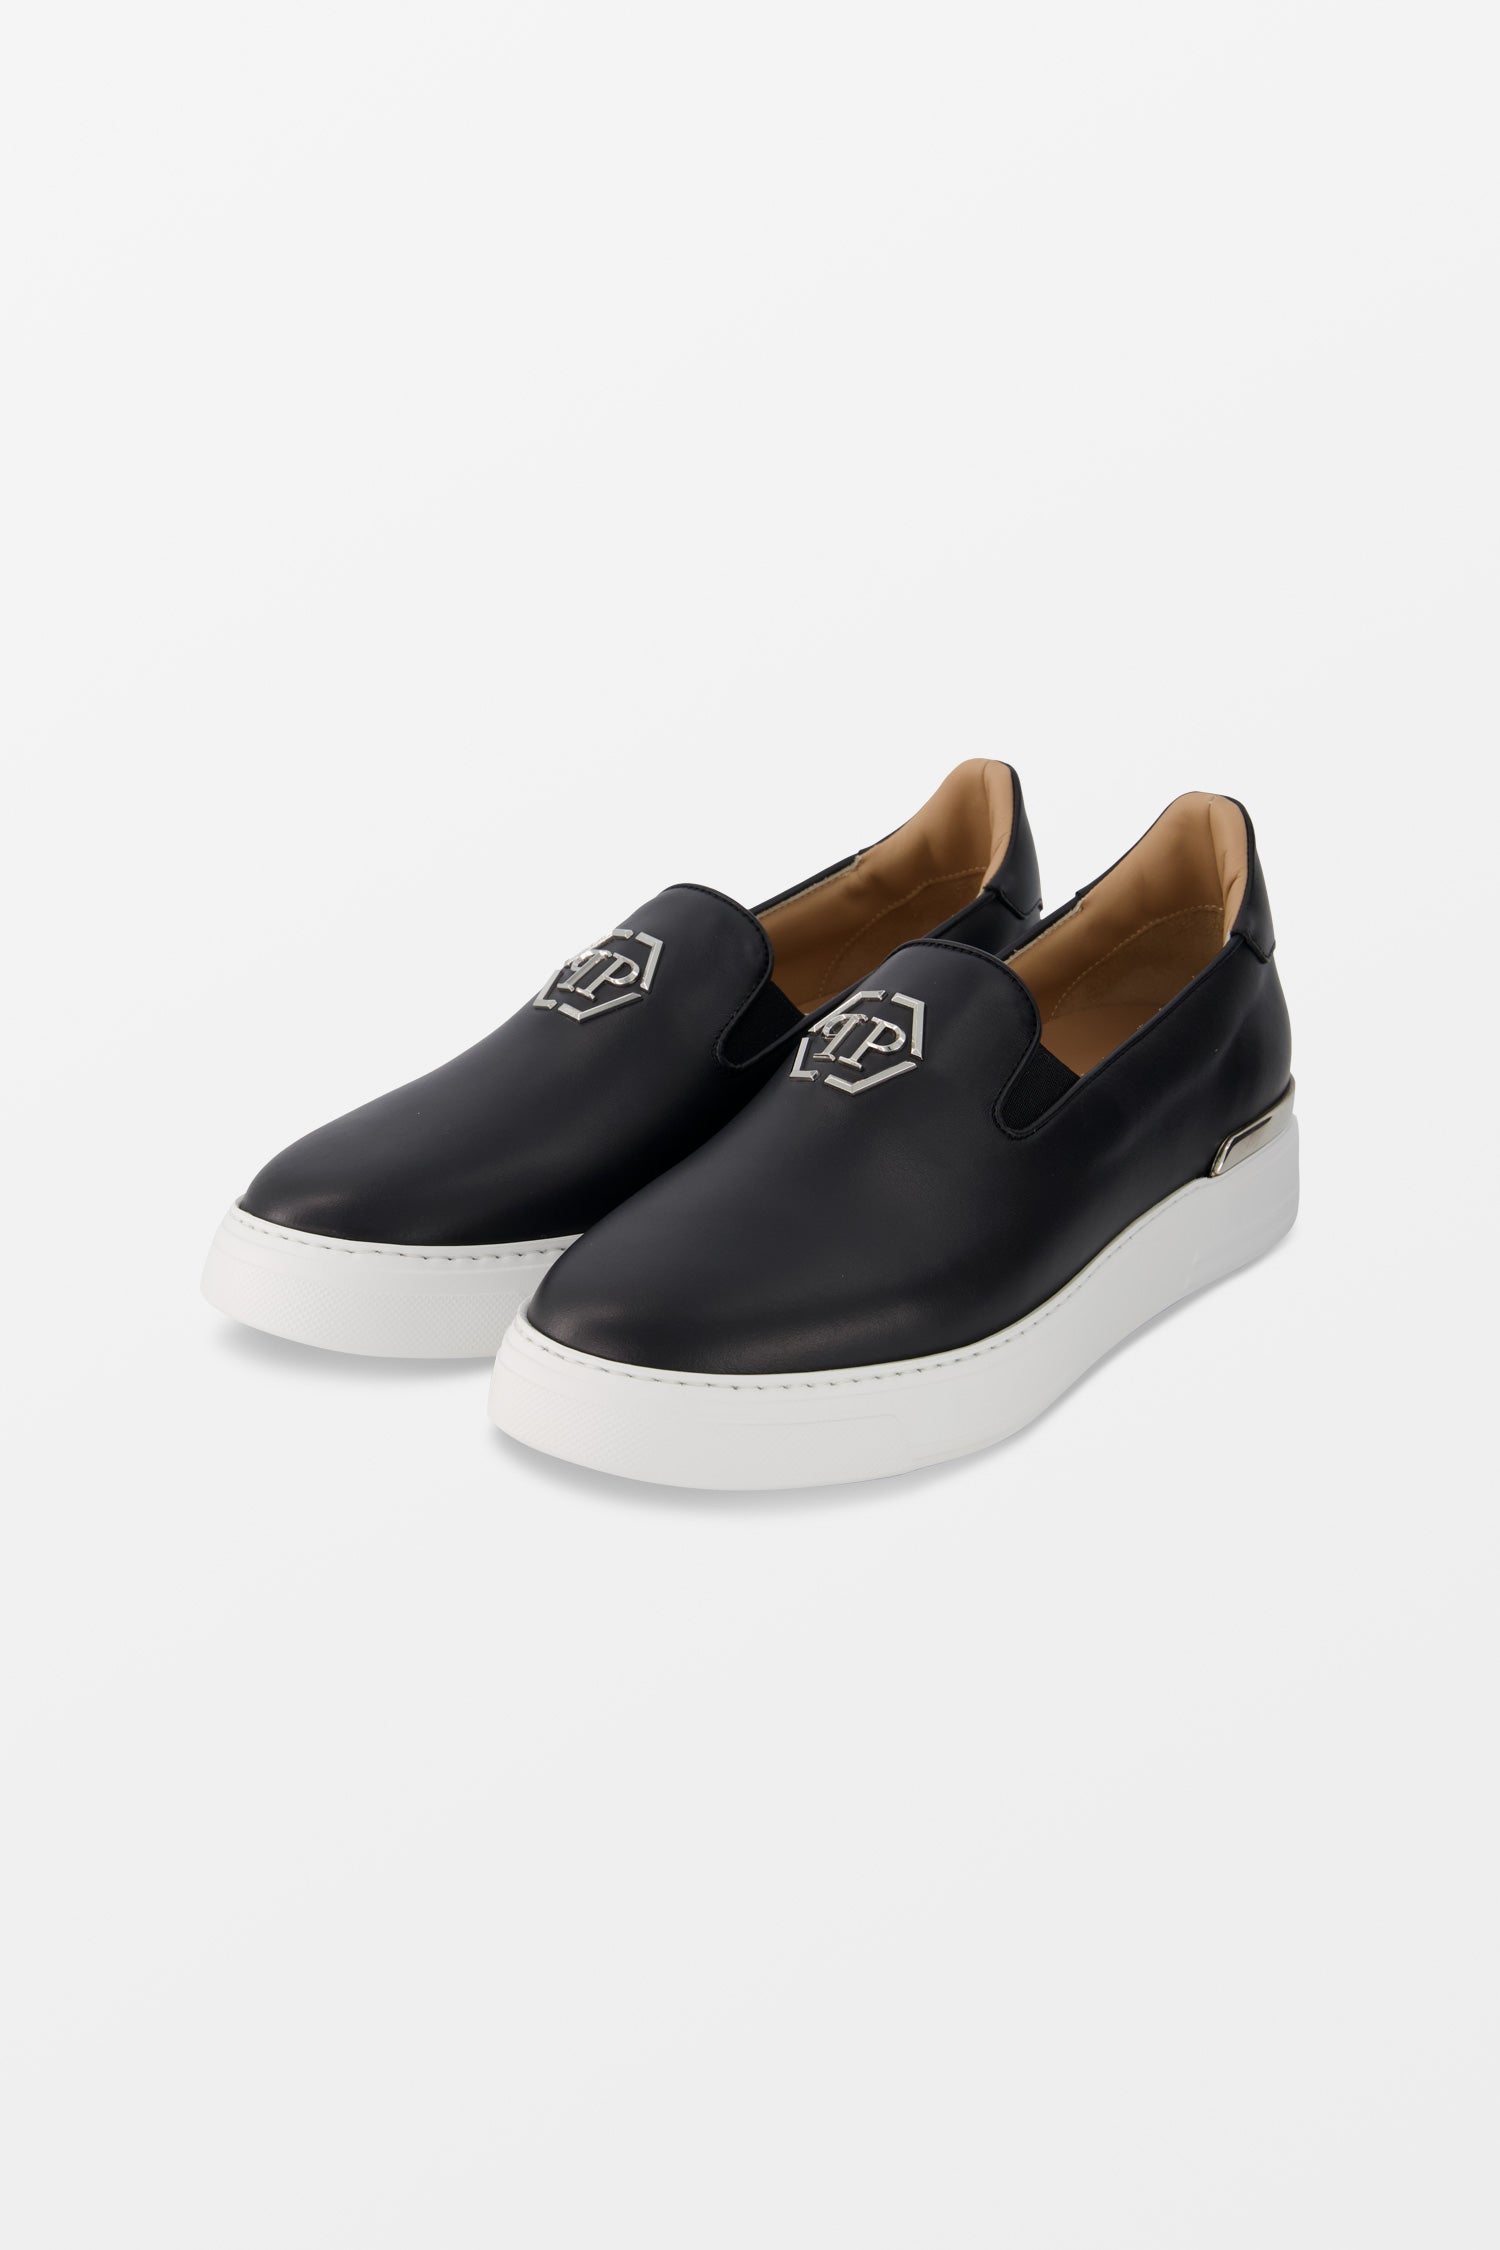 Philipp Plein Hexagon Slip-Ons Black Sneakers